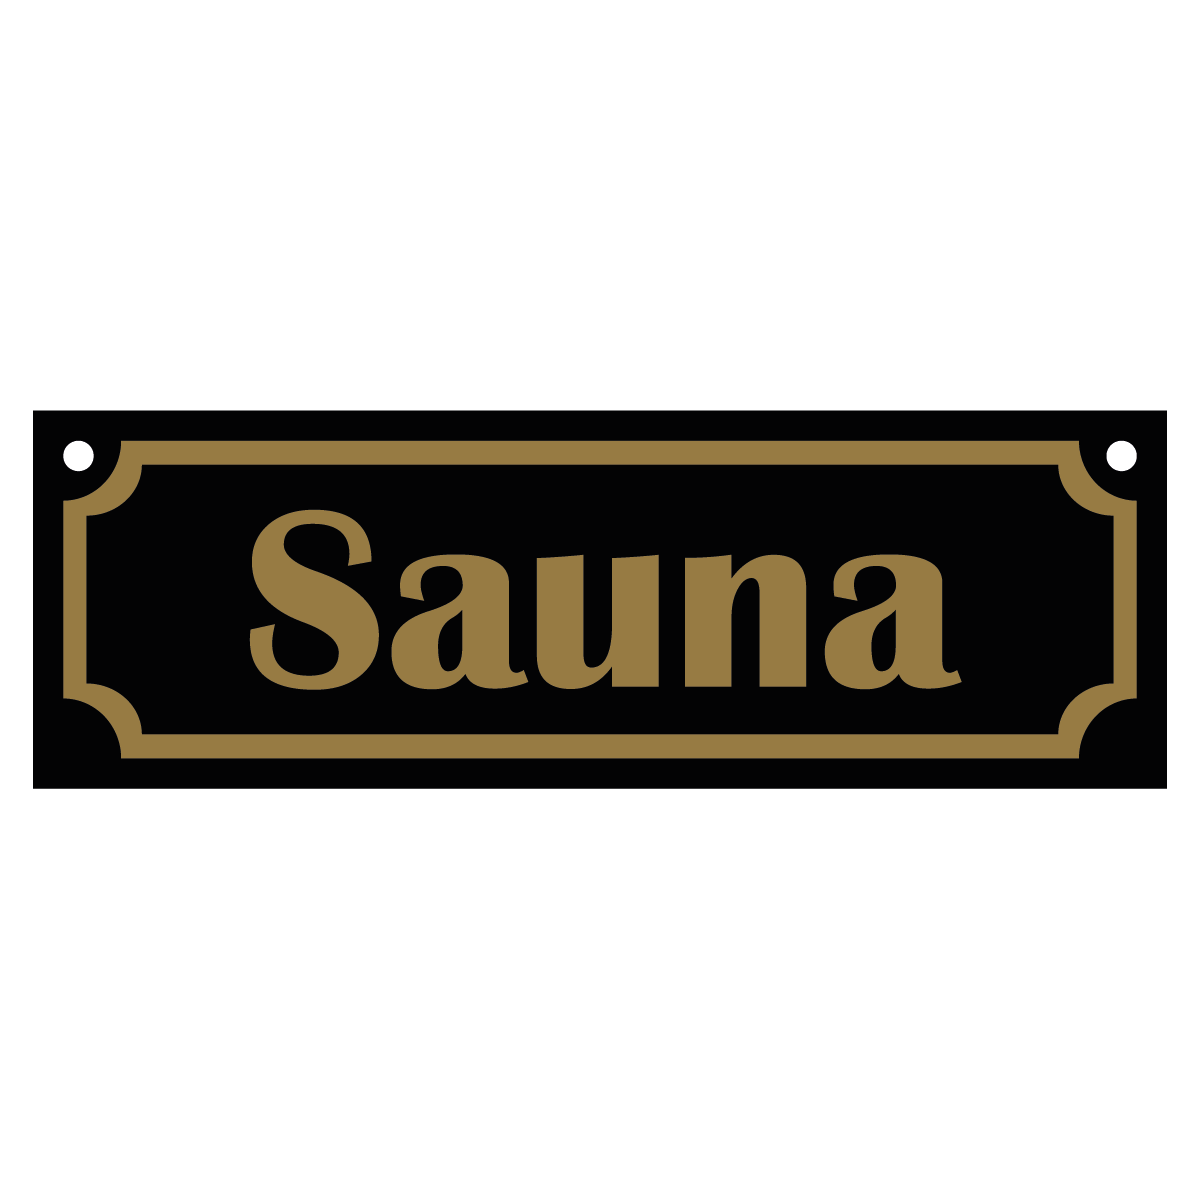 Sauna - Skylt - 150x50mm - Svart - Guld